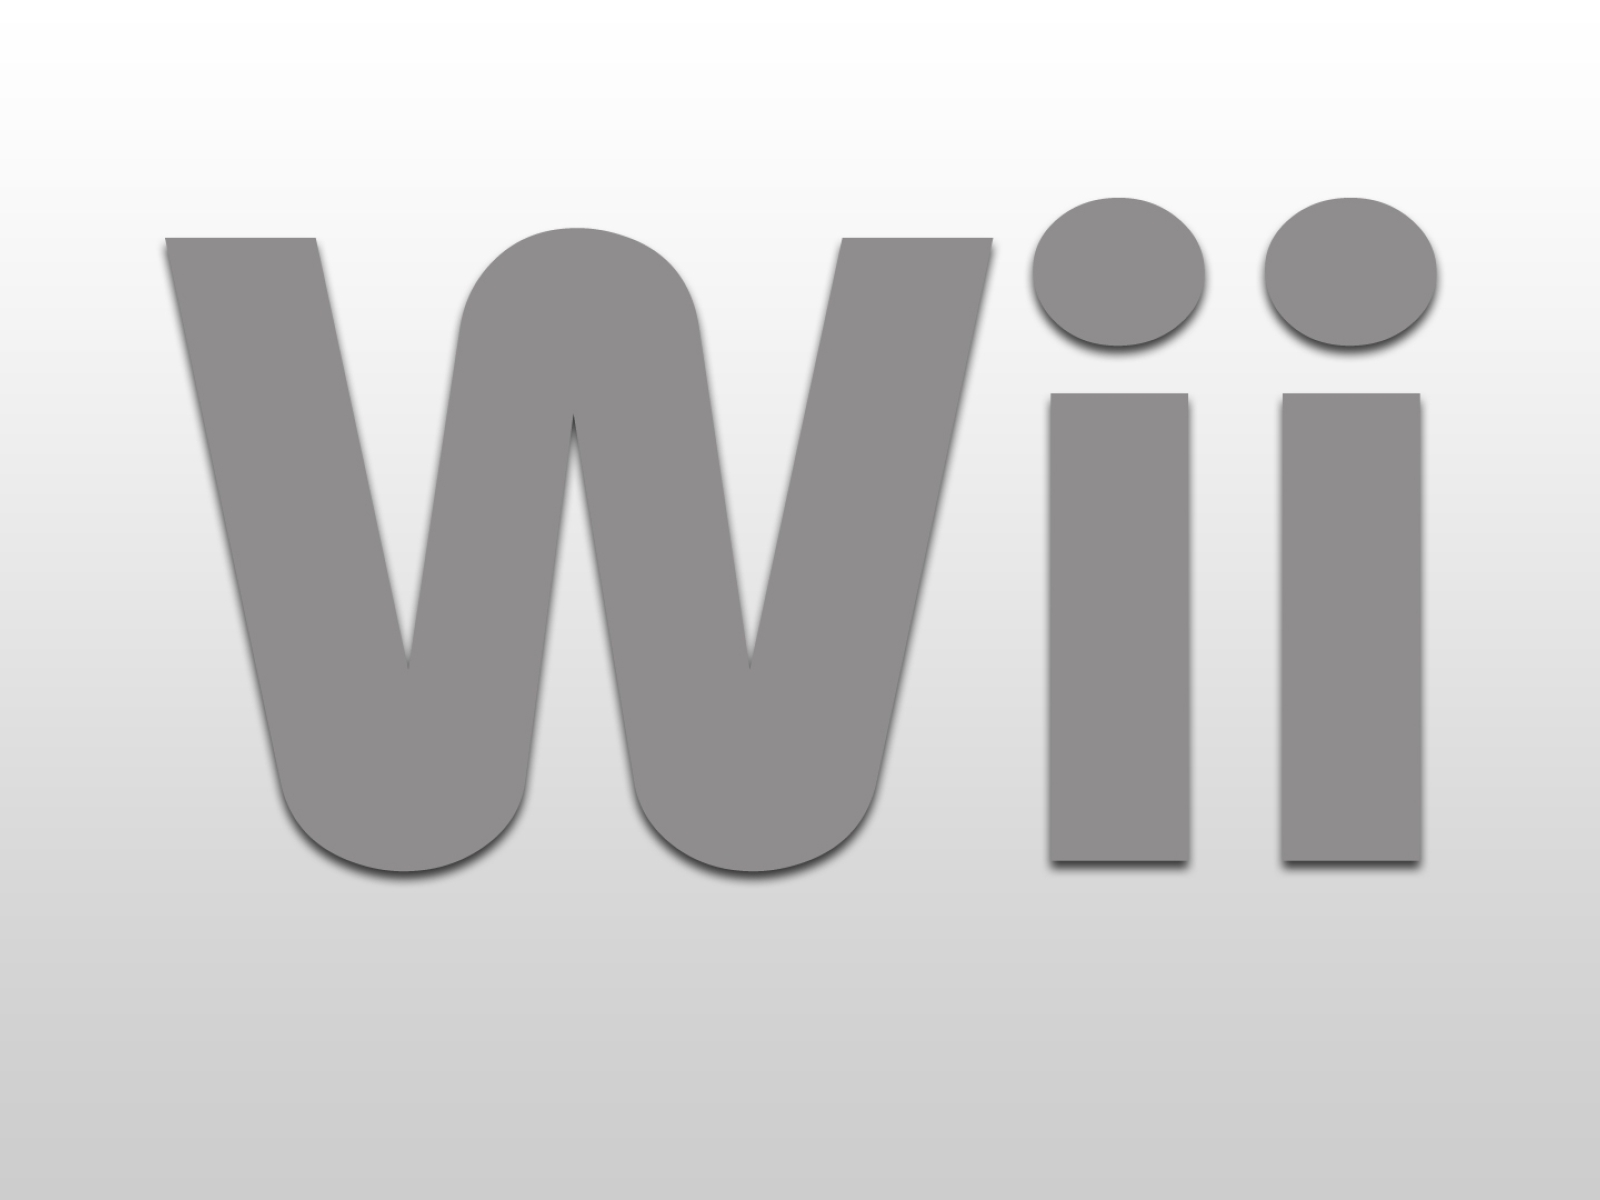 X 208. Nintendo логотип. Nintendo logo. Nintendo logo 1024x1024.